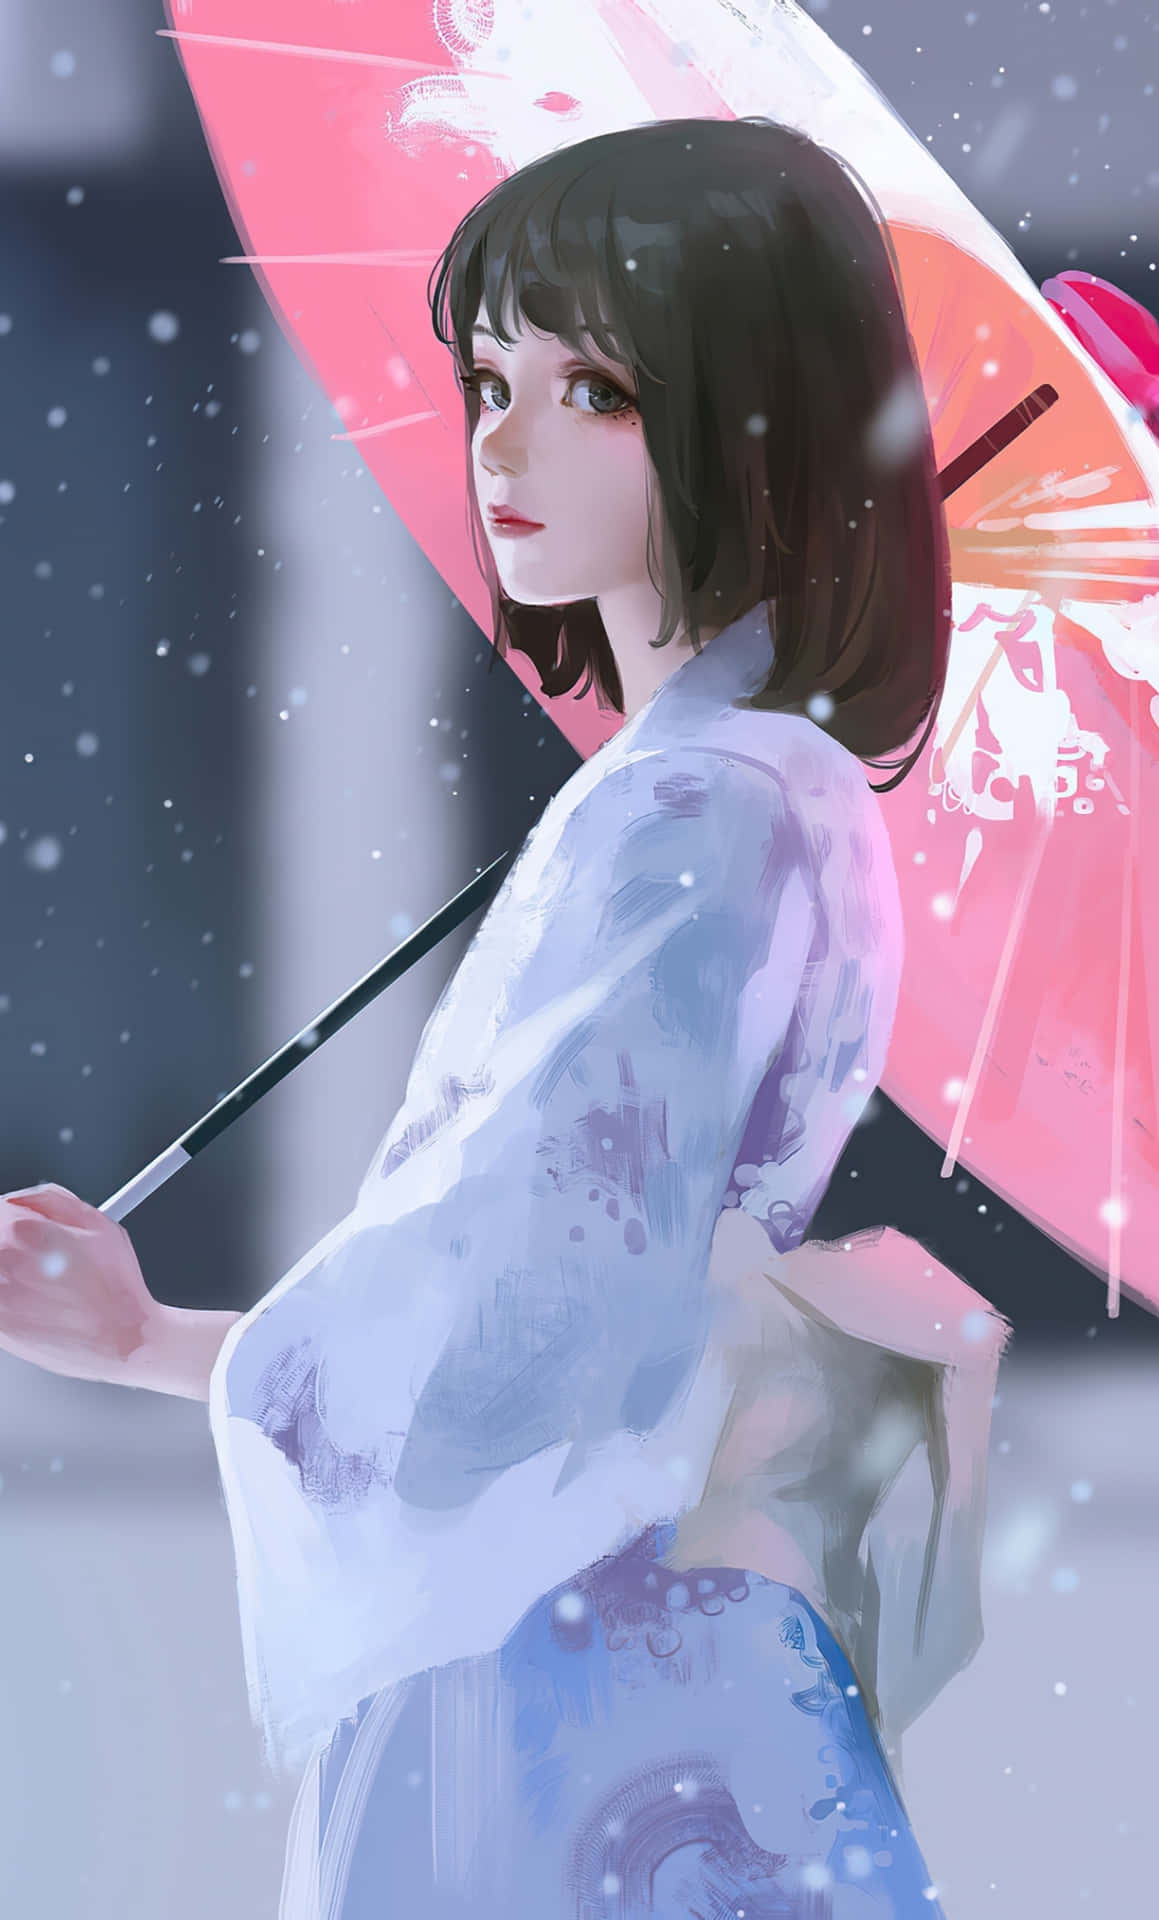 Animetonårsflicka I Kimono-bild.